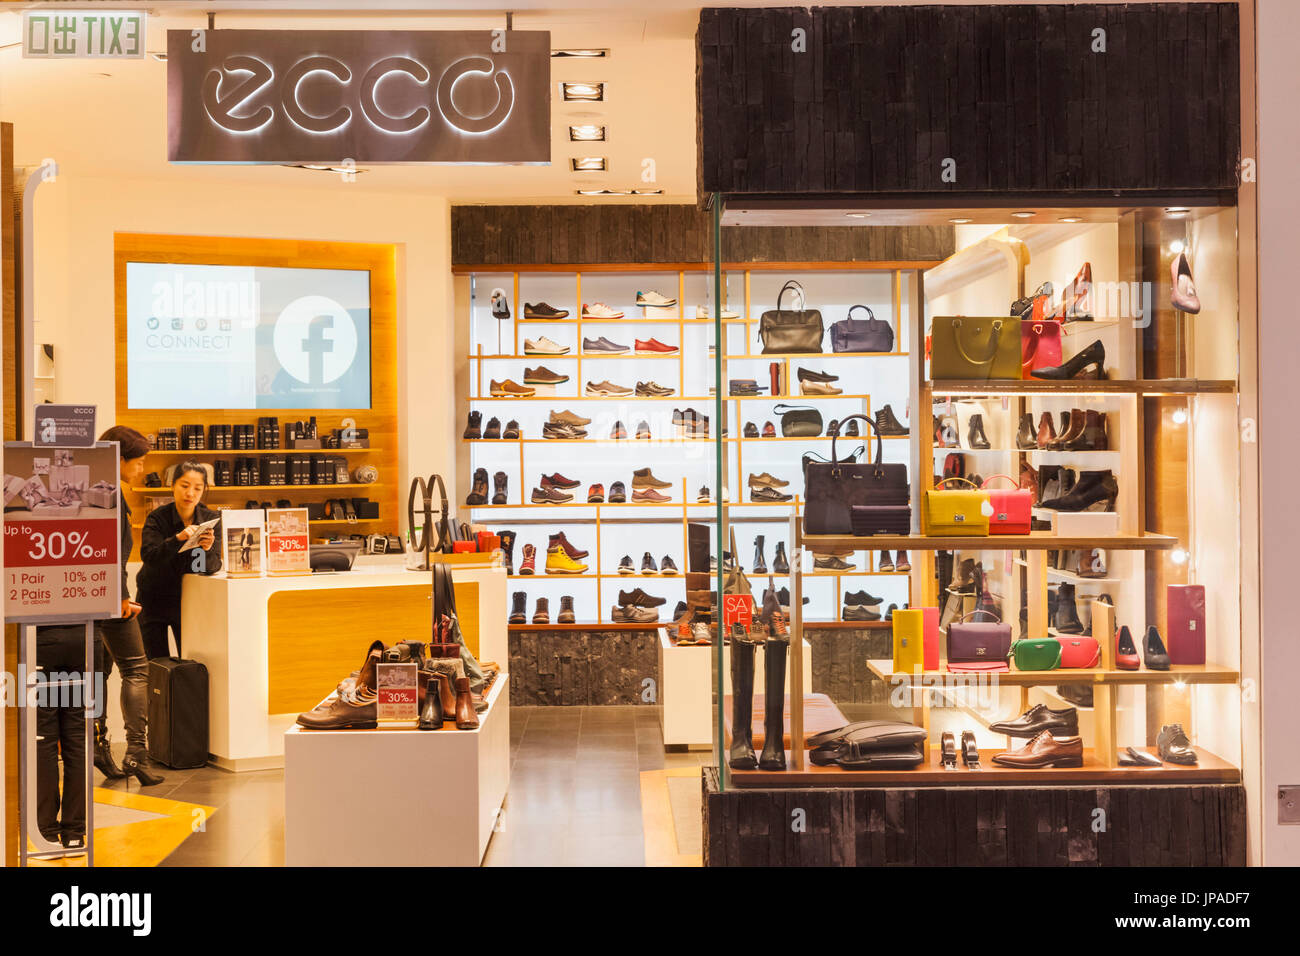 China, Hong Kong, Central, IFC Shopping Mall, Ecco Store Stock Photo - Alamy